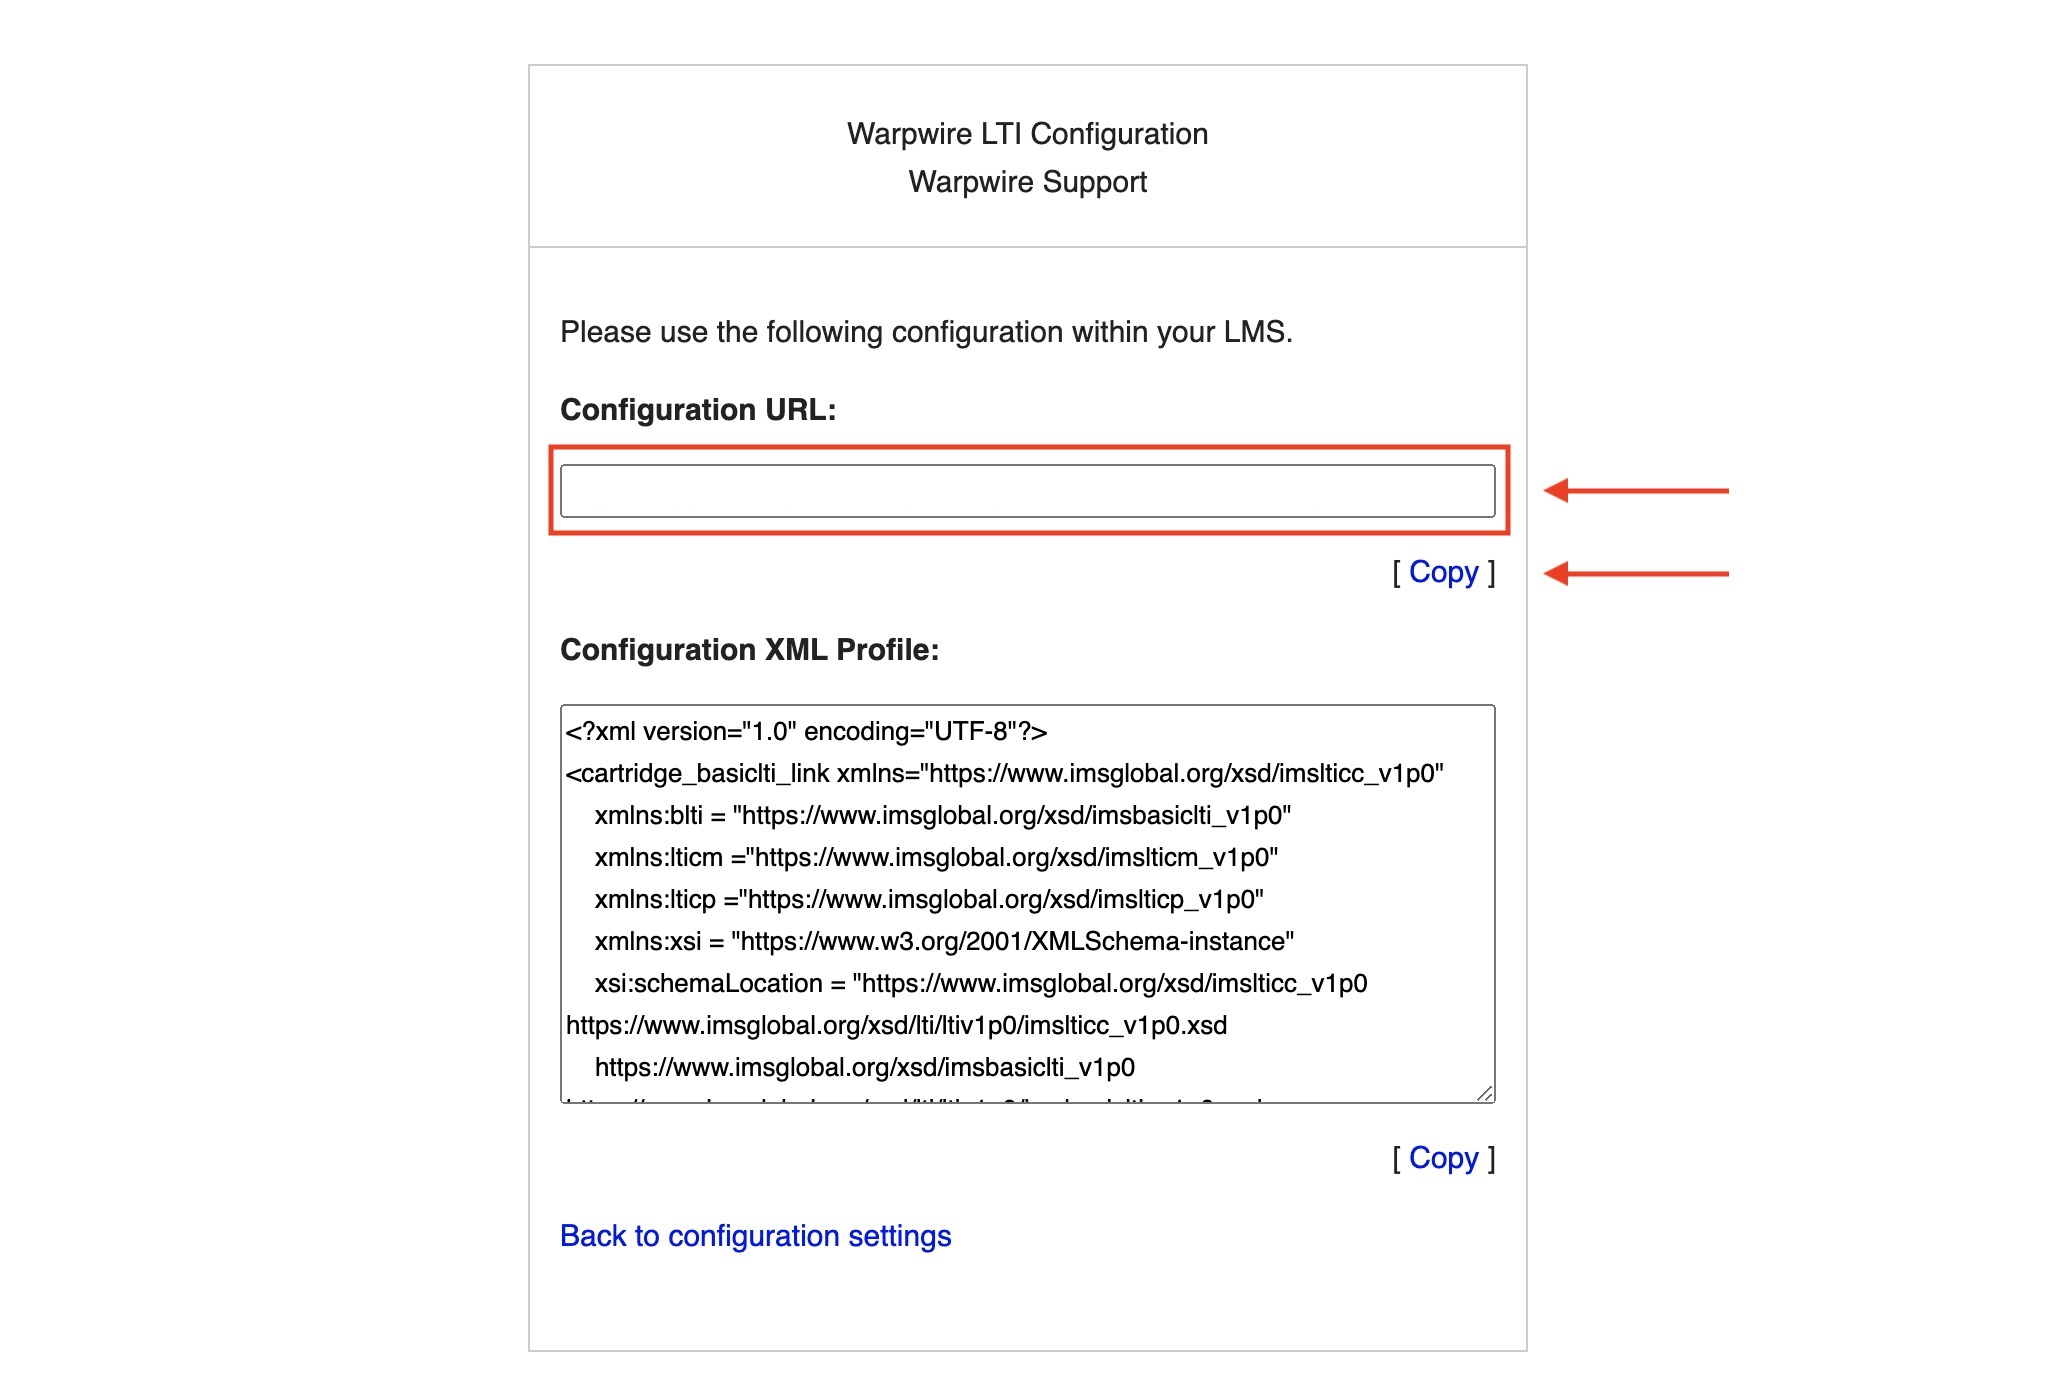 Copy the configuration URL